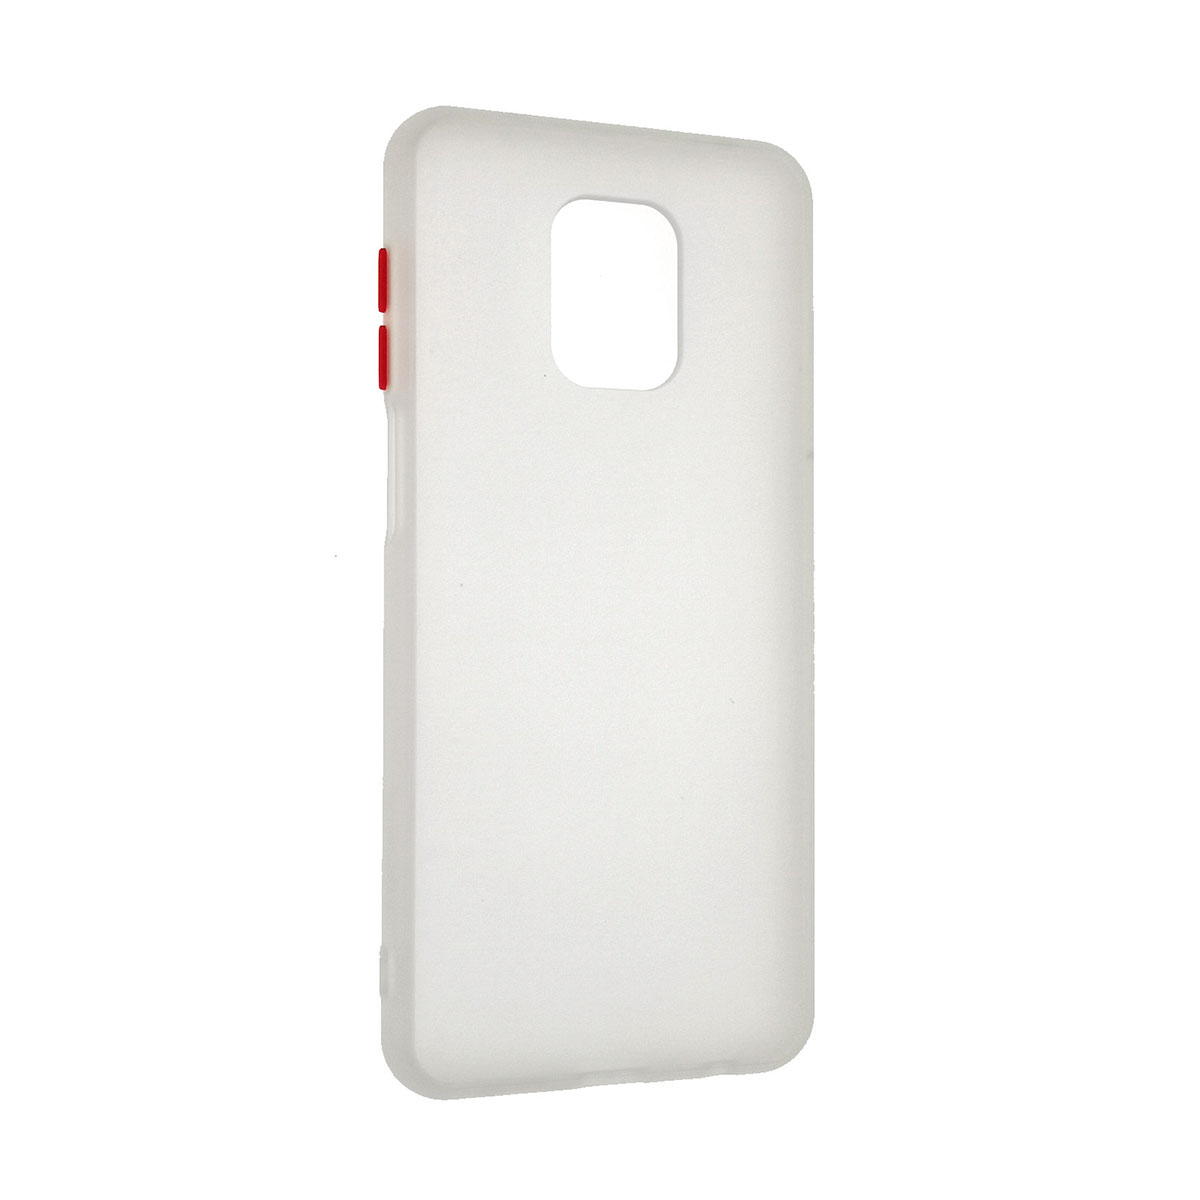 Чехол накладка SKIN SHELL для XIAOMI Redmi Note 9 Pro, Redmi Note 9S, силикон, пластик, цвет белый